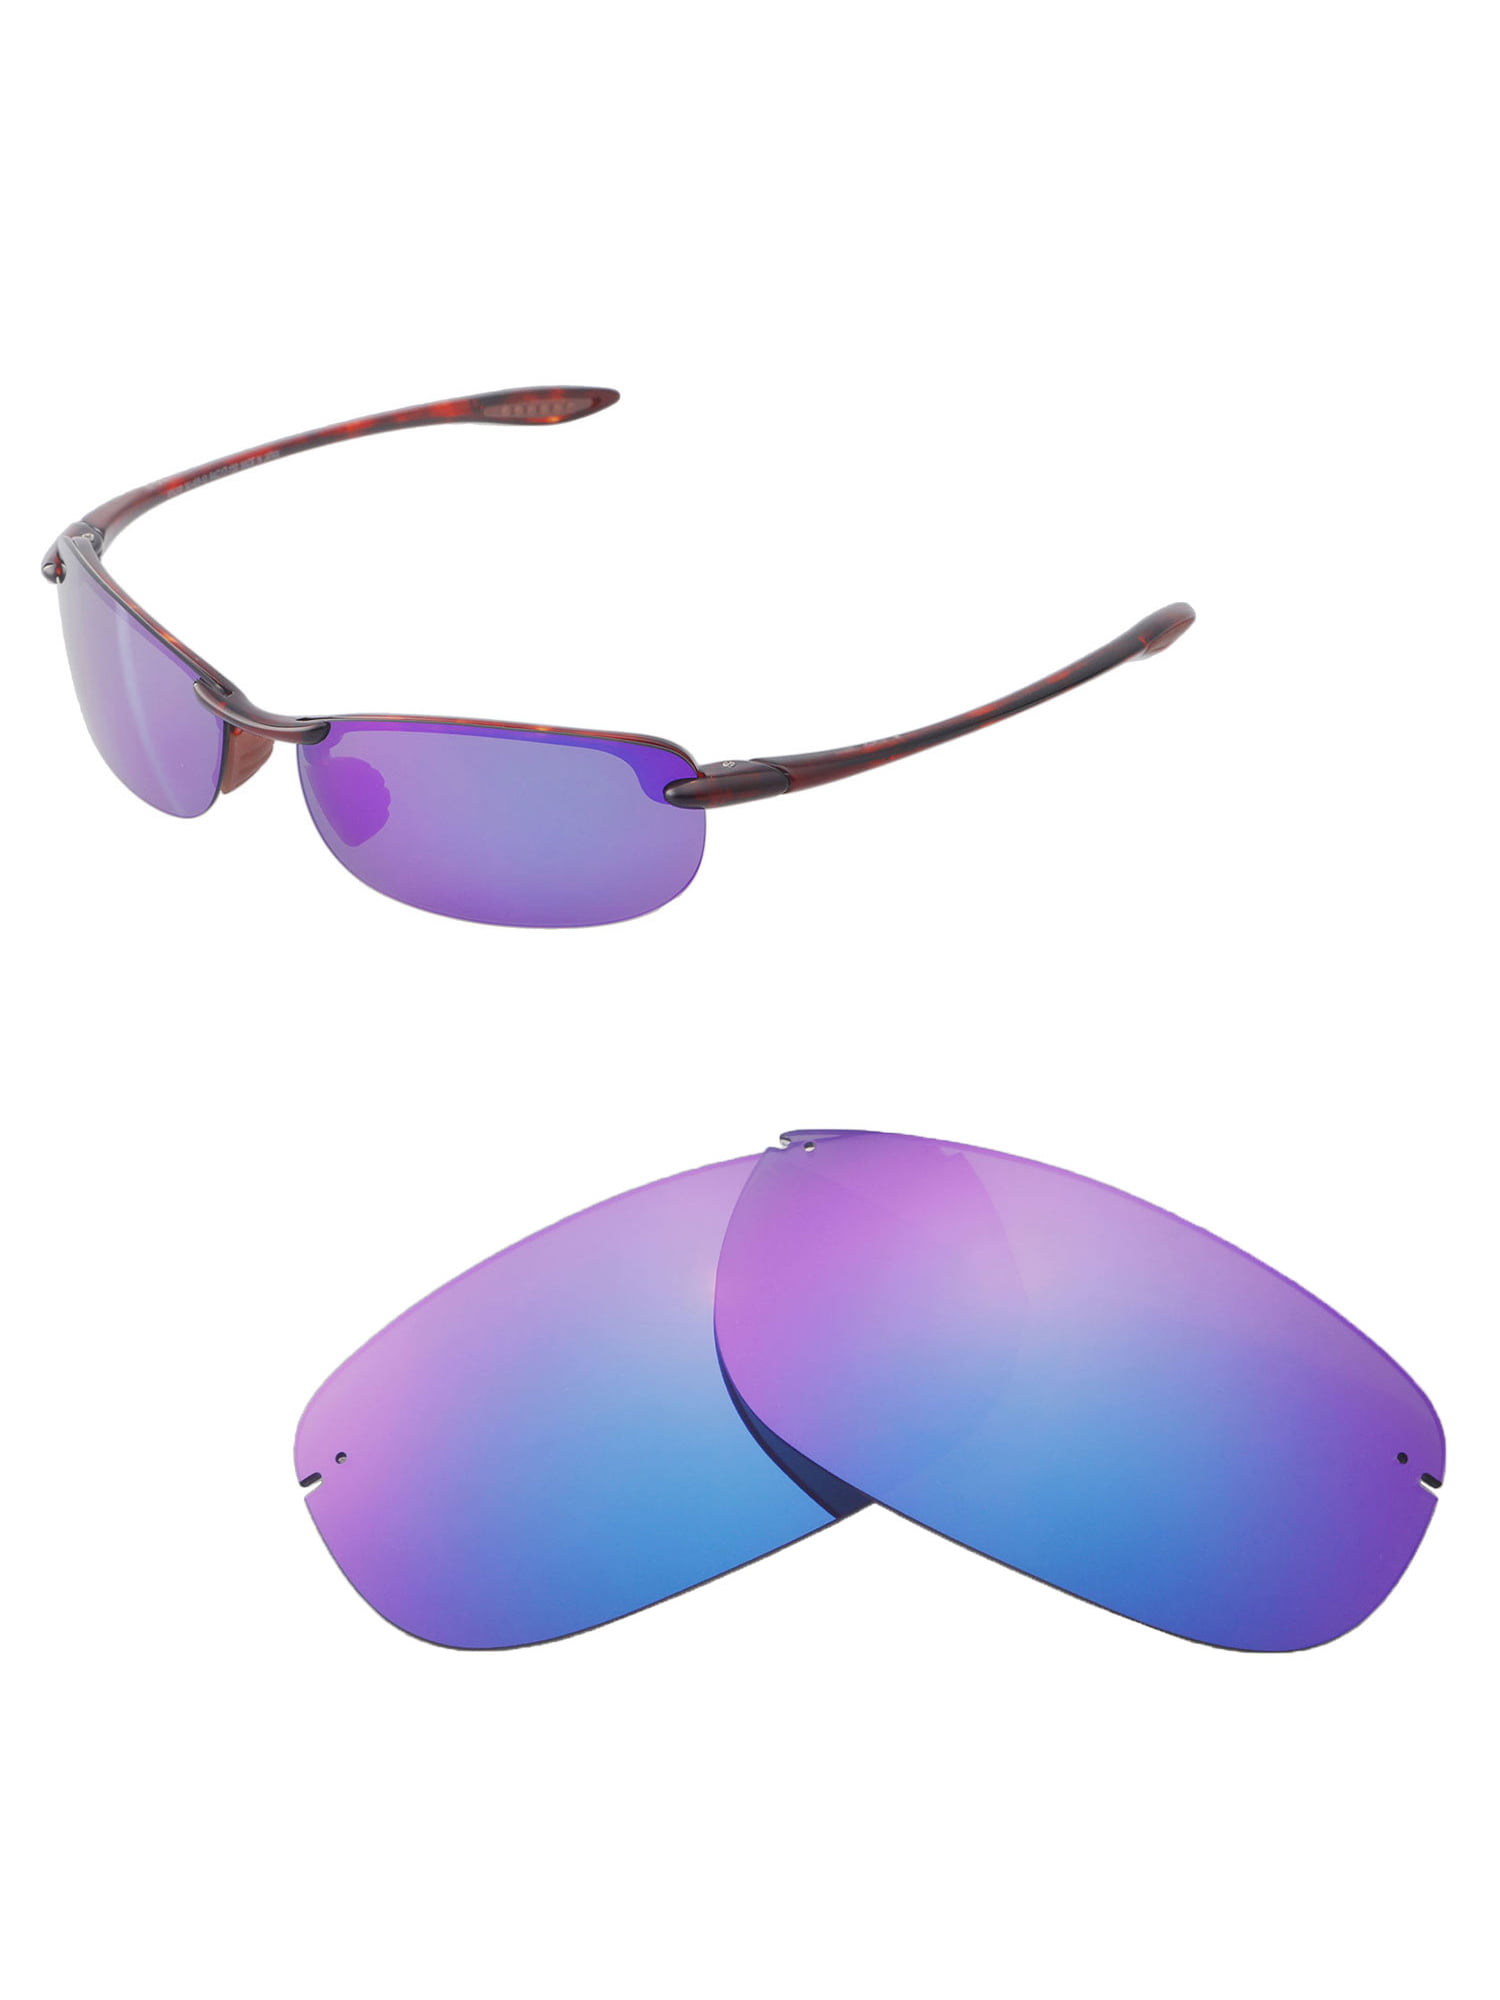 Walleva Polarized Ice Blue Replacement Lenses For Maui Jim Stingray Sunglasses 